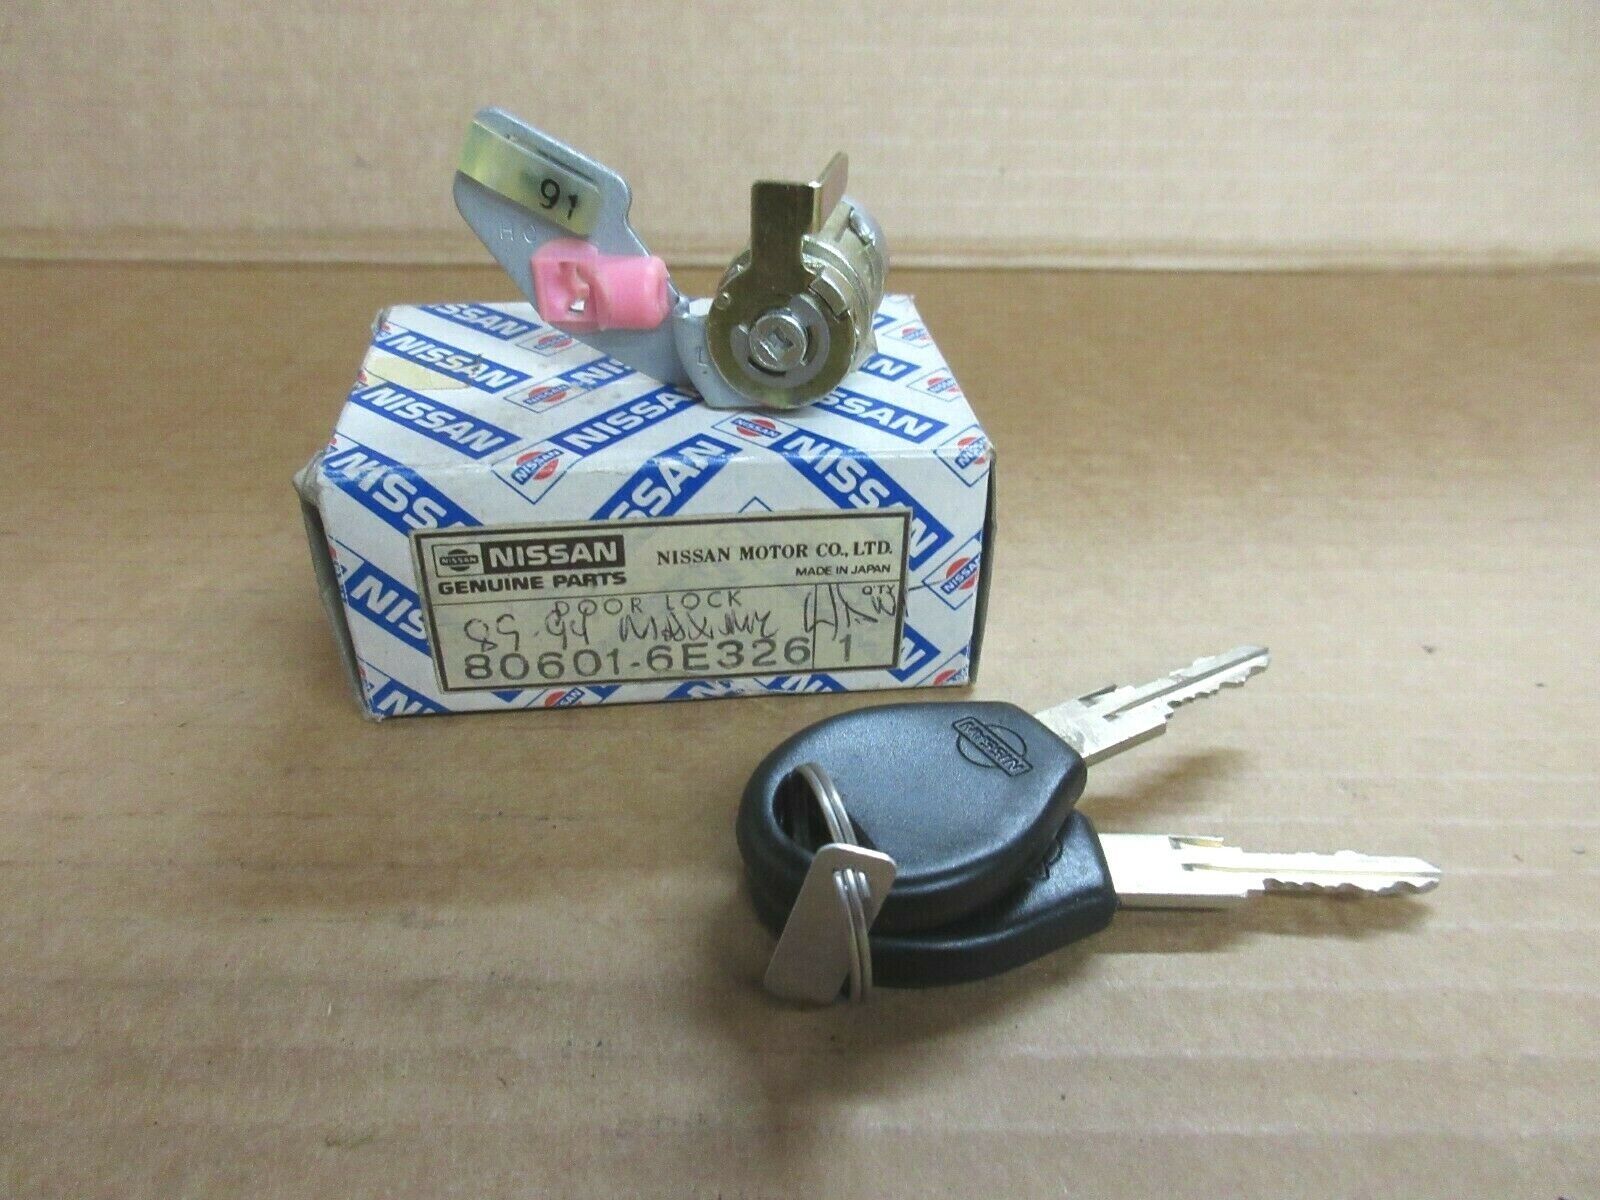 Vintage NOS Nissan 80601-6E326 Cylinder Door Lock & Key 1991-1994 Nissan Maxima - $82.87